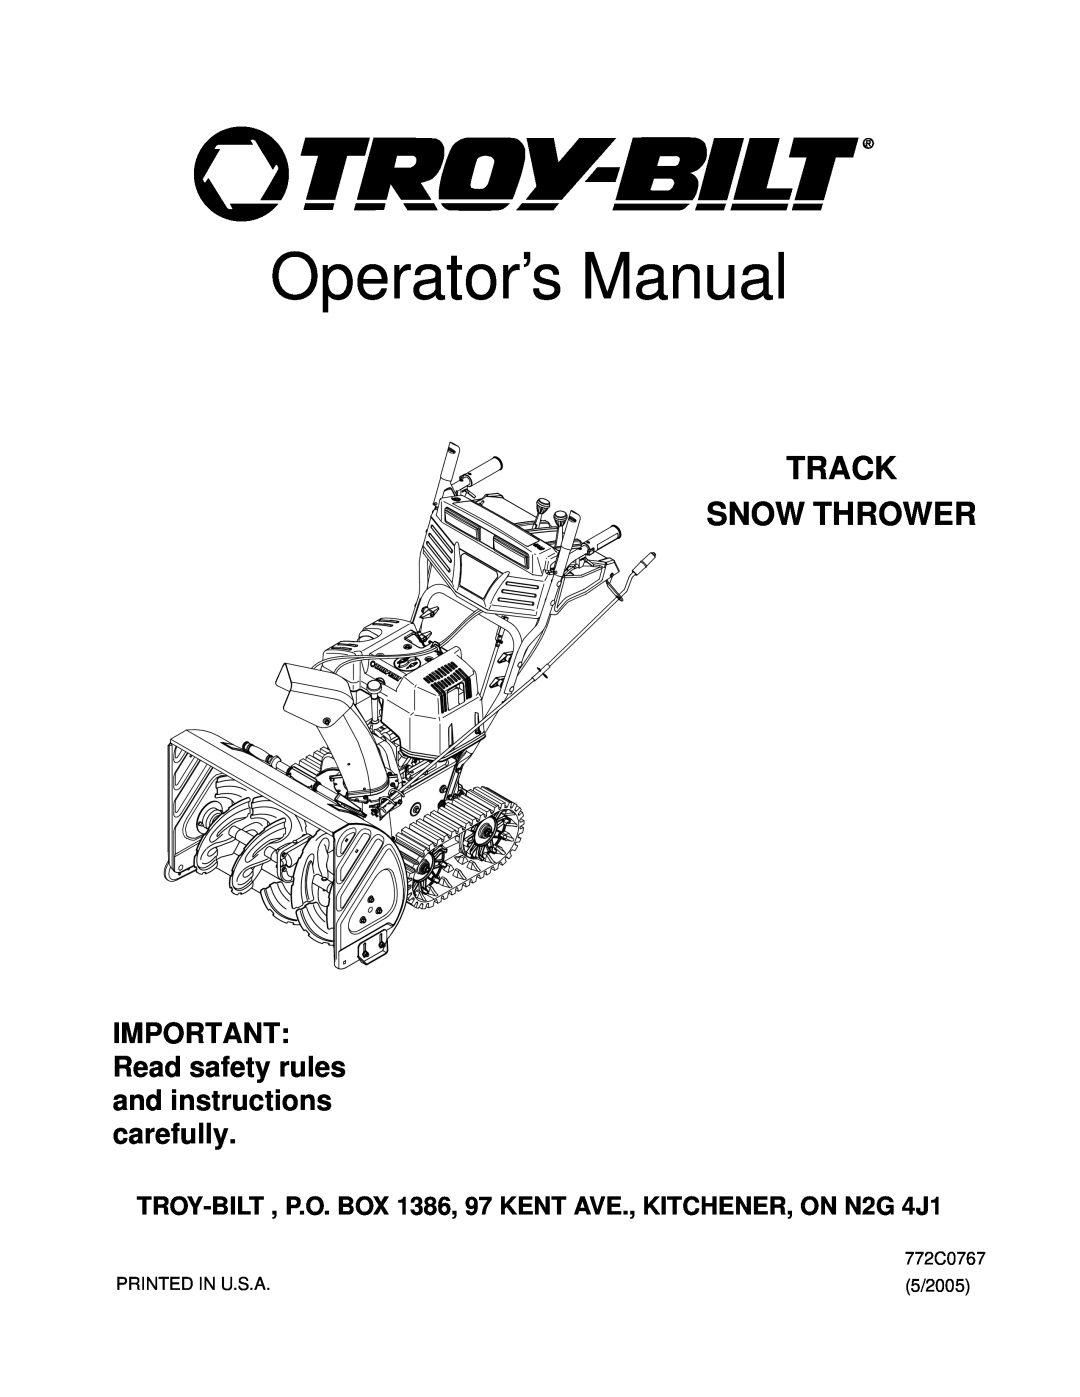 Troy-Bilt OEM-390-679 manual Operator’s Manual, Track Snow Thrower 